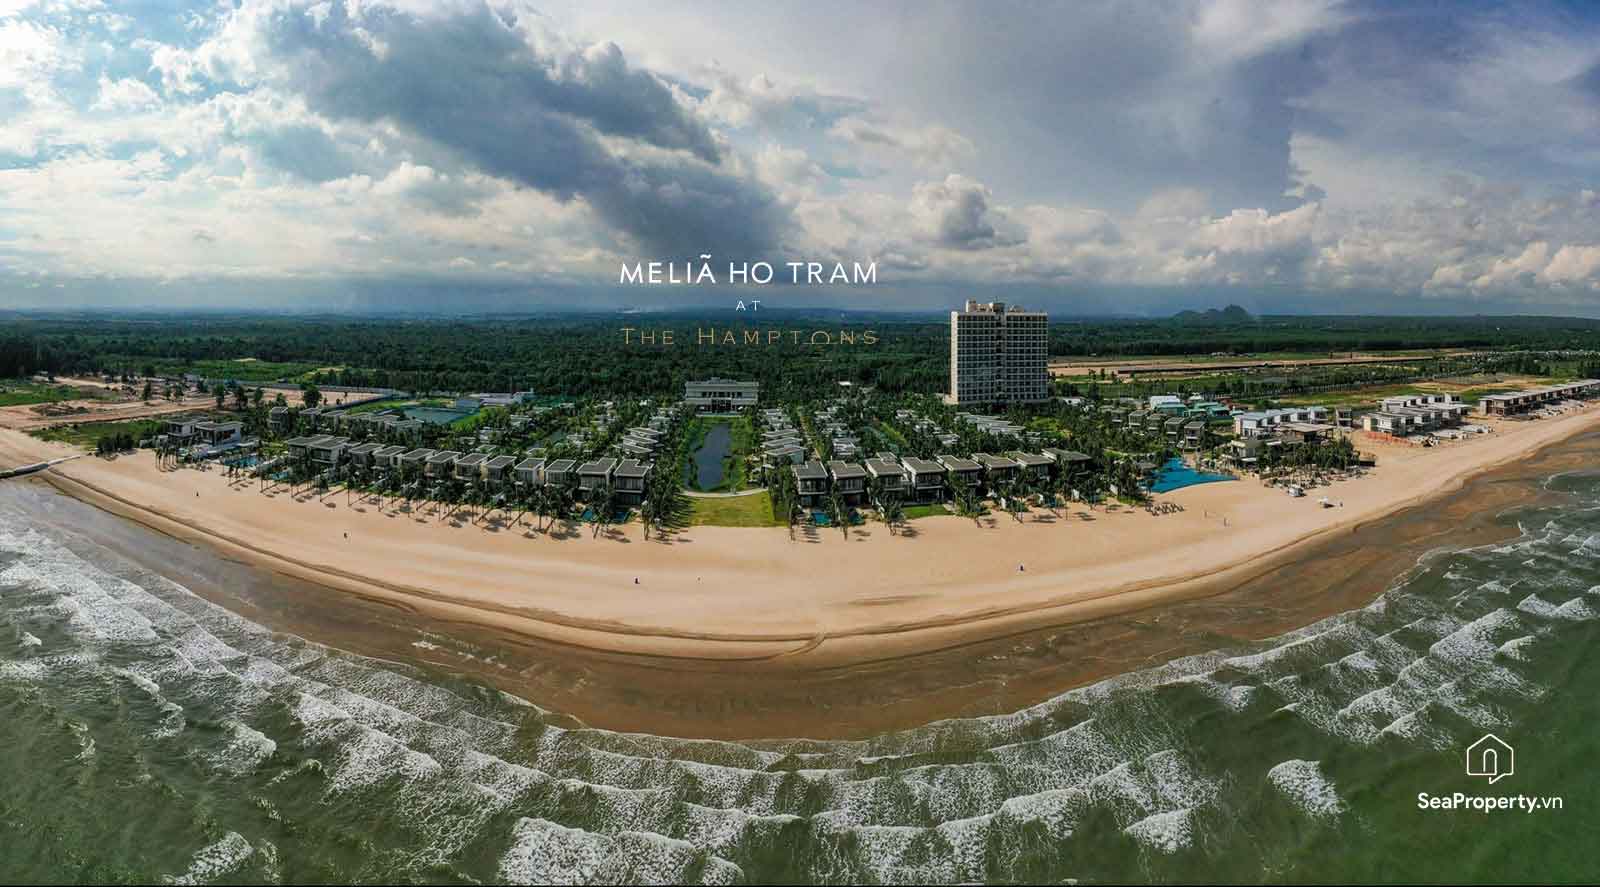 Melia Hồ Tràm The Hamptons Beach Resort